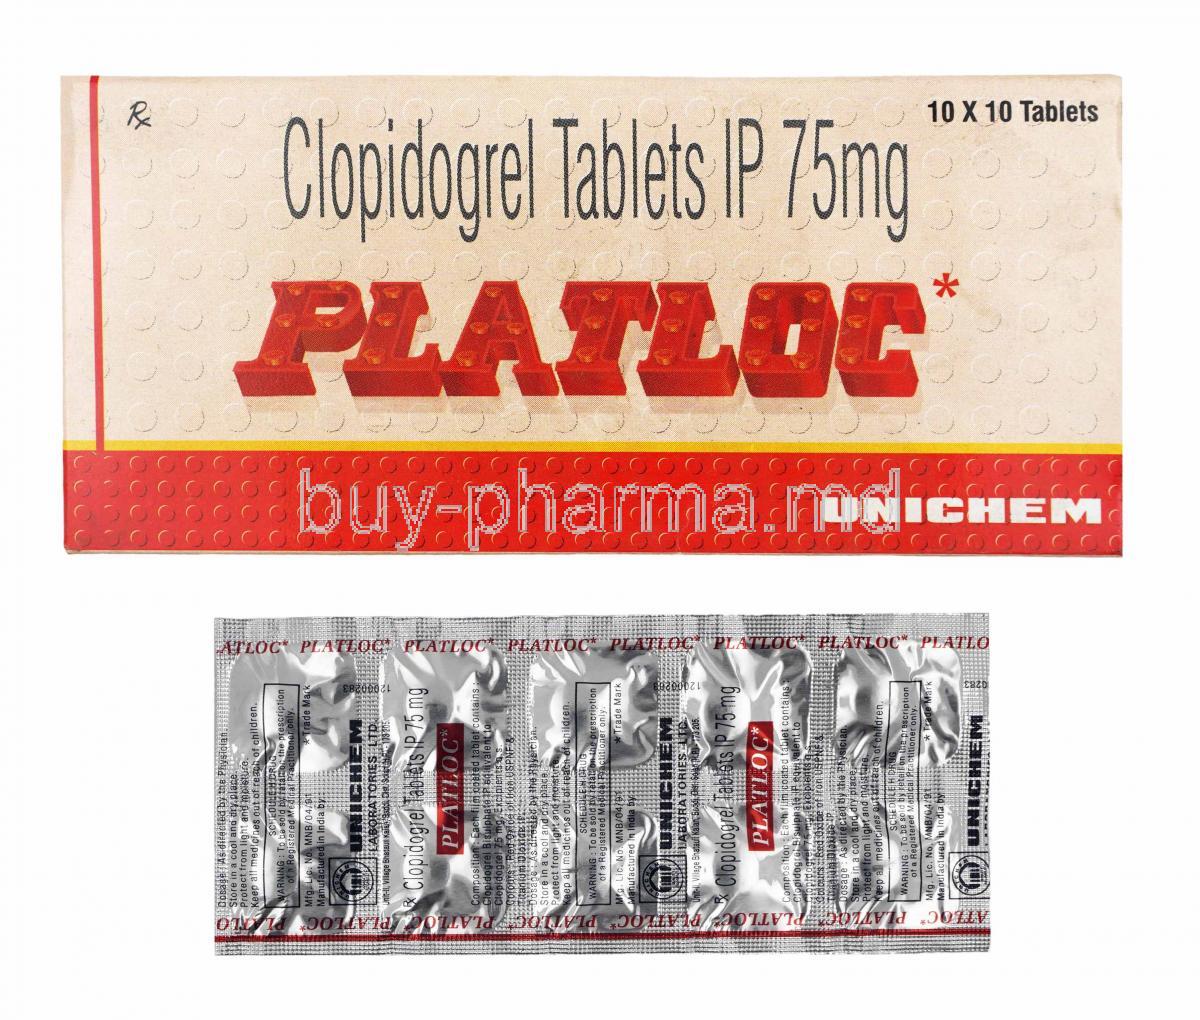 Platloc, Clopidogrel 75mg box and tablets